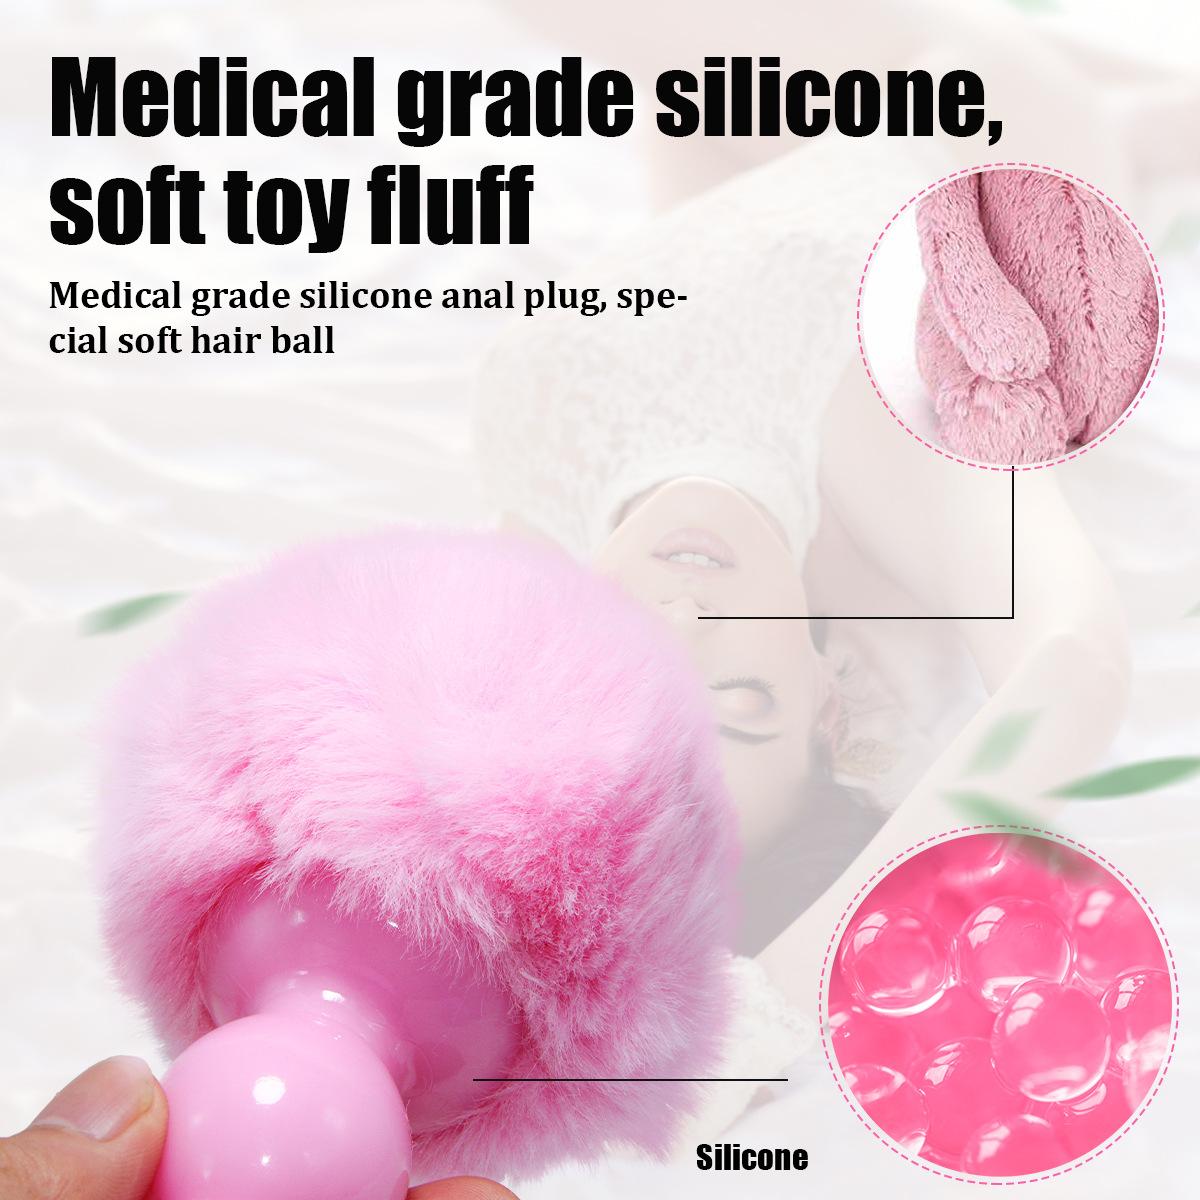 Soft glue, hairy ball, anal plug